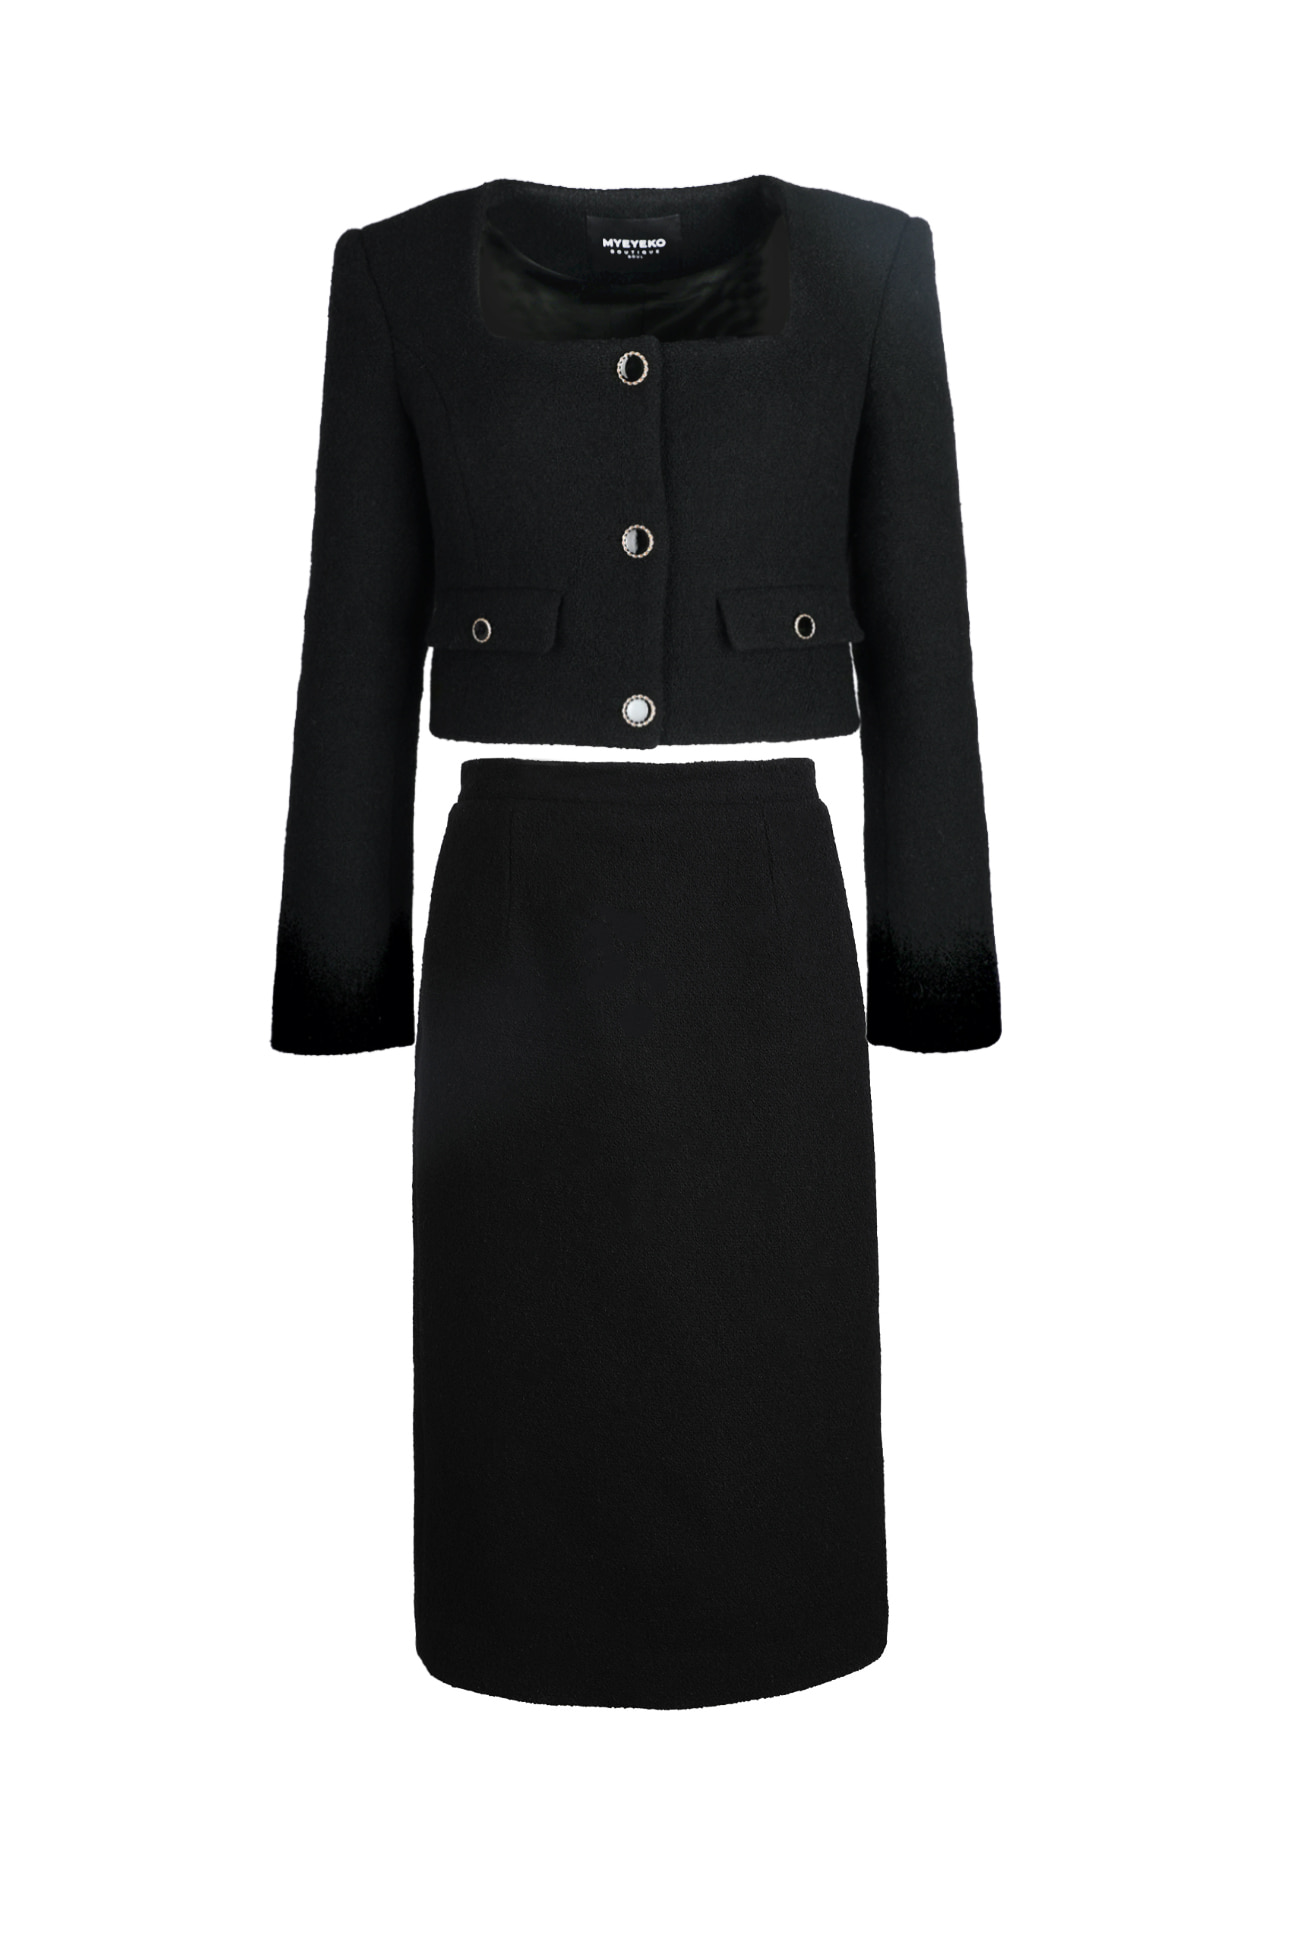 HIGH QUALITY LINE - Black Tweed Jacket+Skirt Set